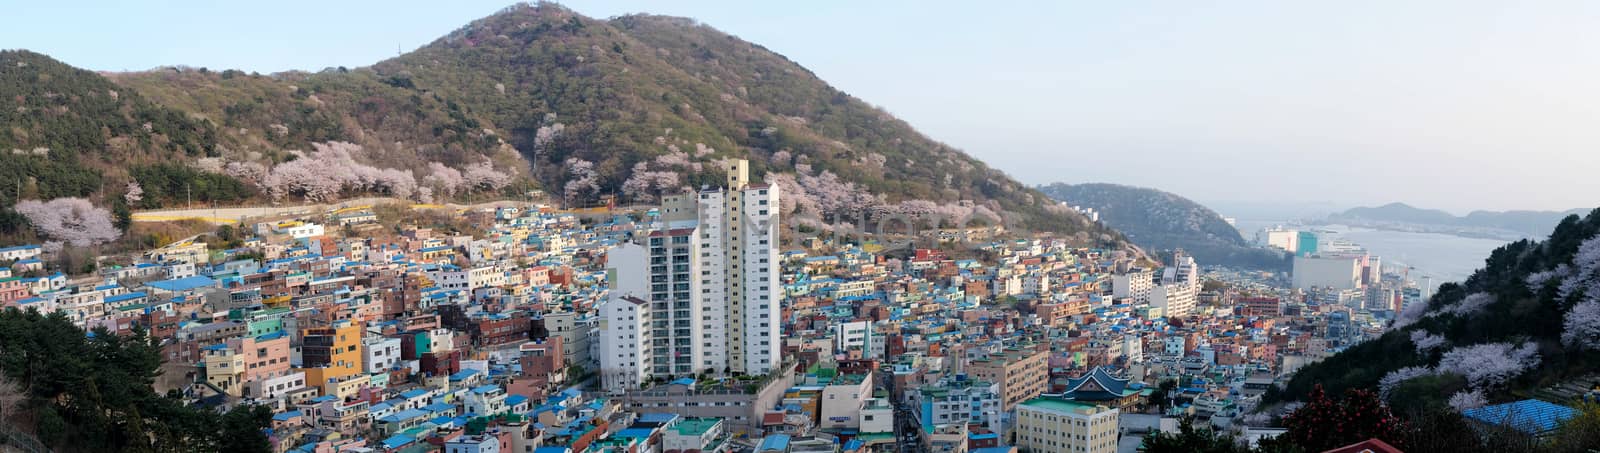 View of Gamcheon Culture Village, Busan, South Korea.